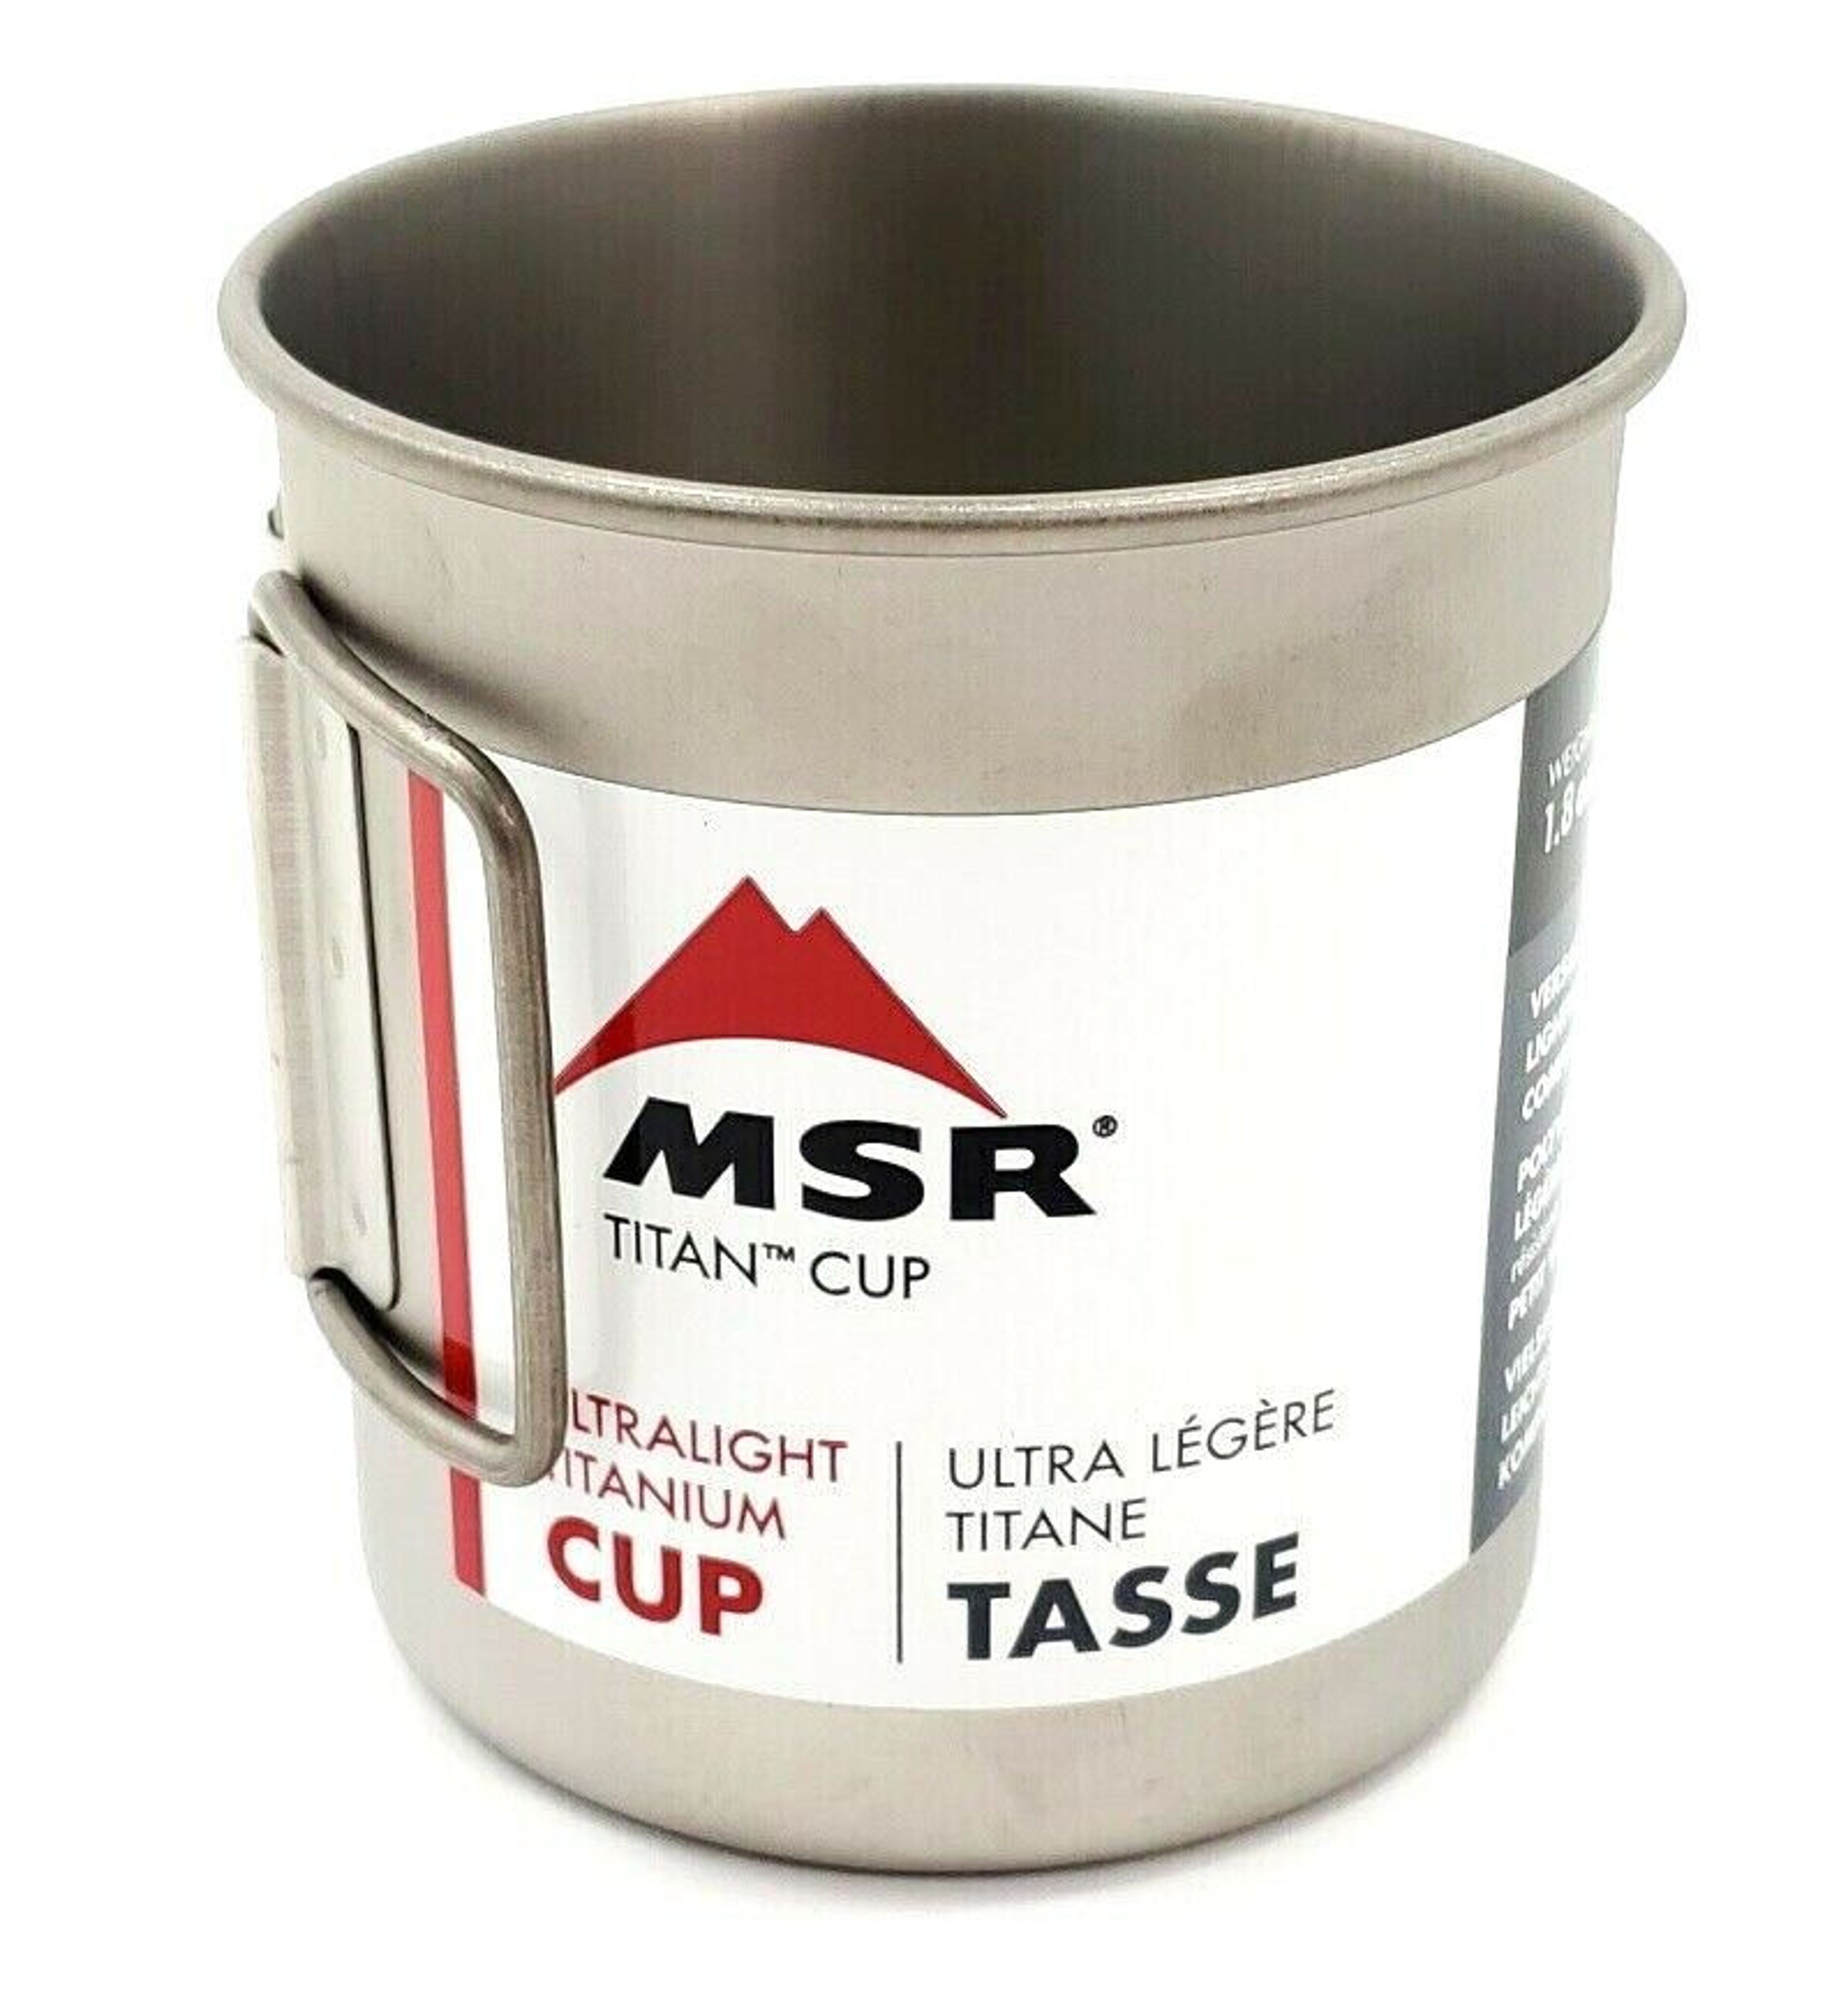 MSR TITAN Cup